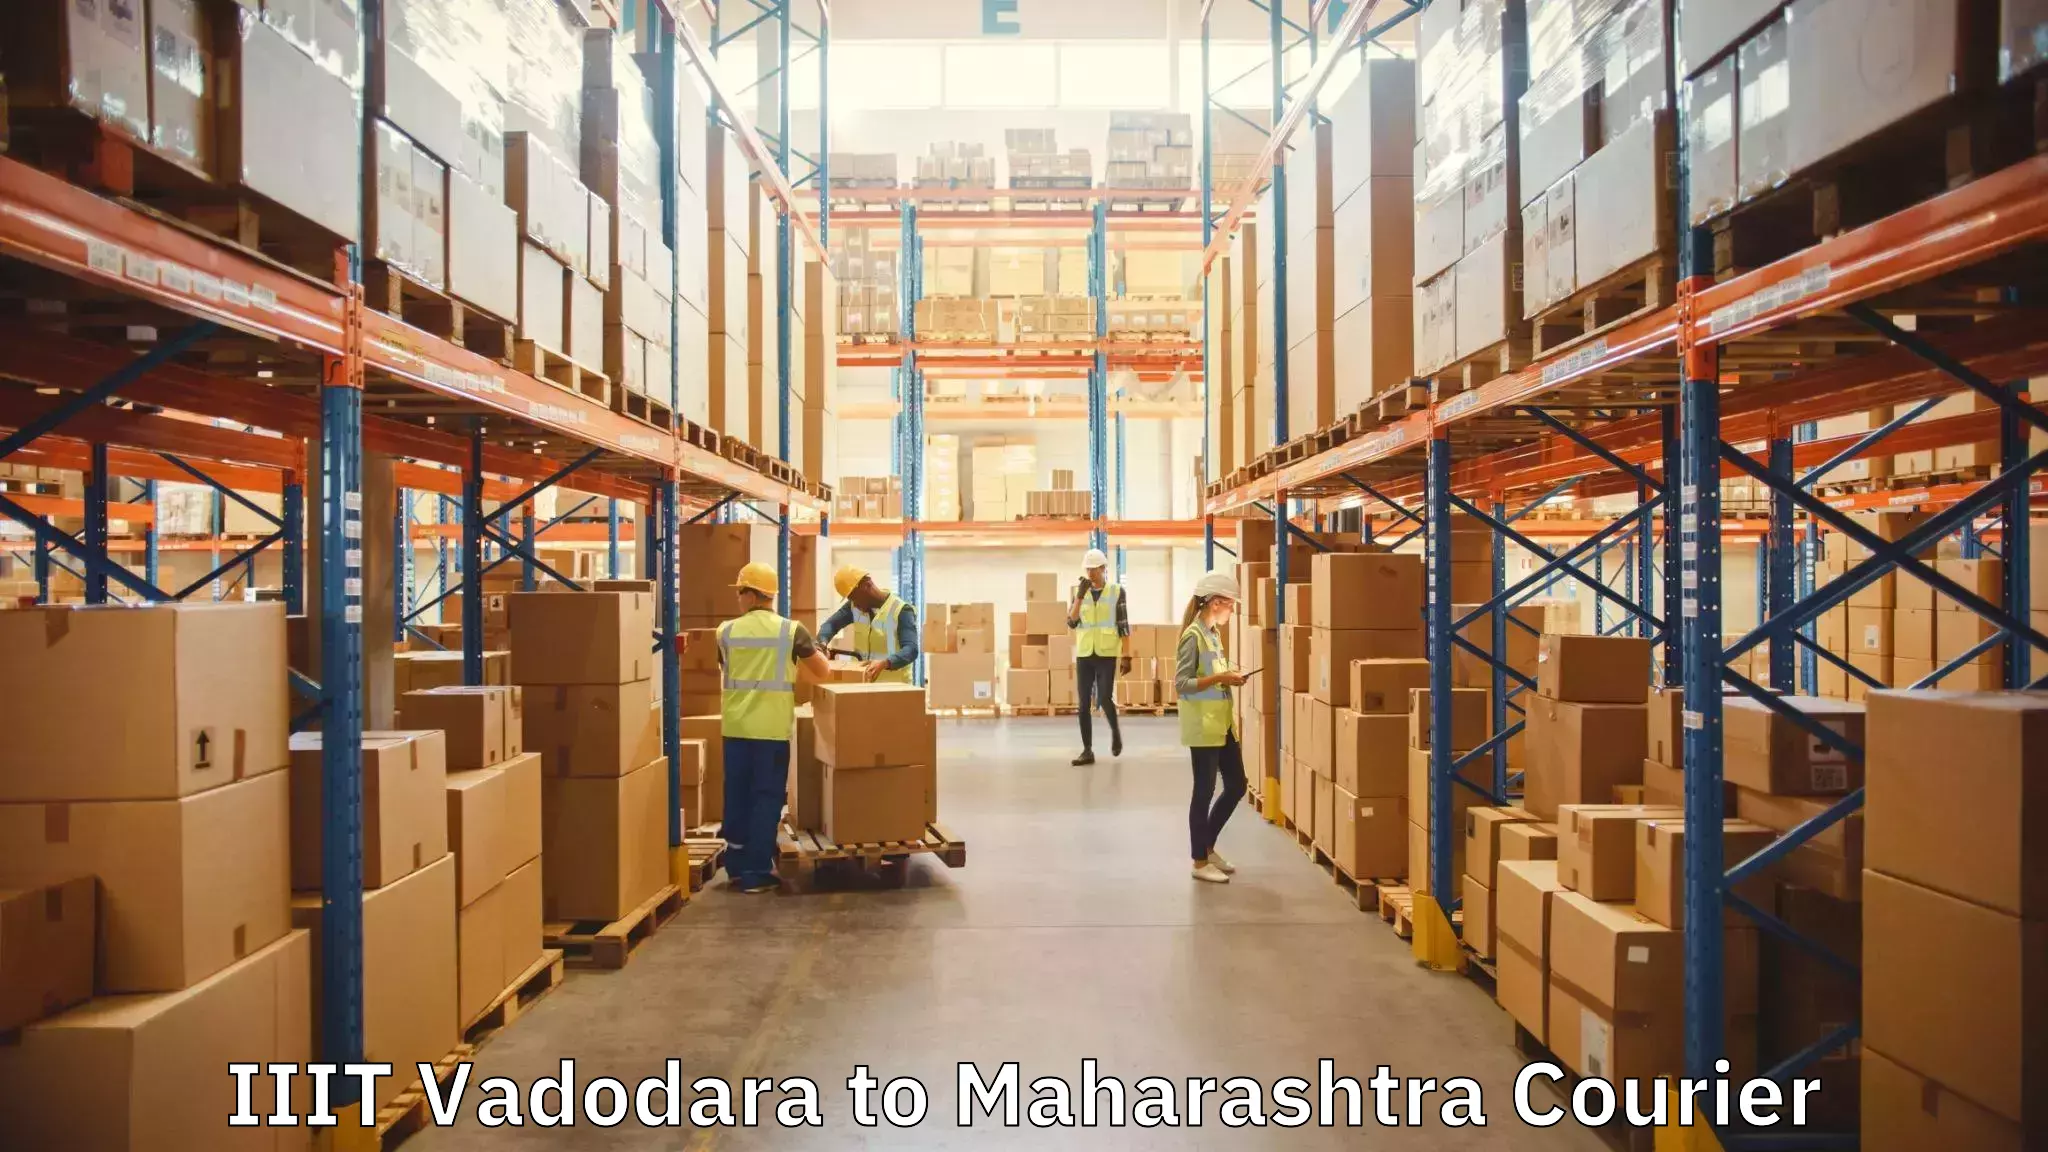 Moving and storage services IIIT Vadodara to Maharashtra